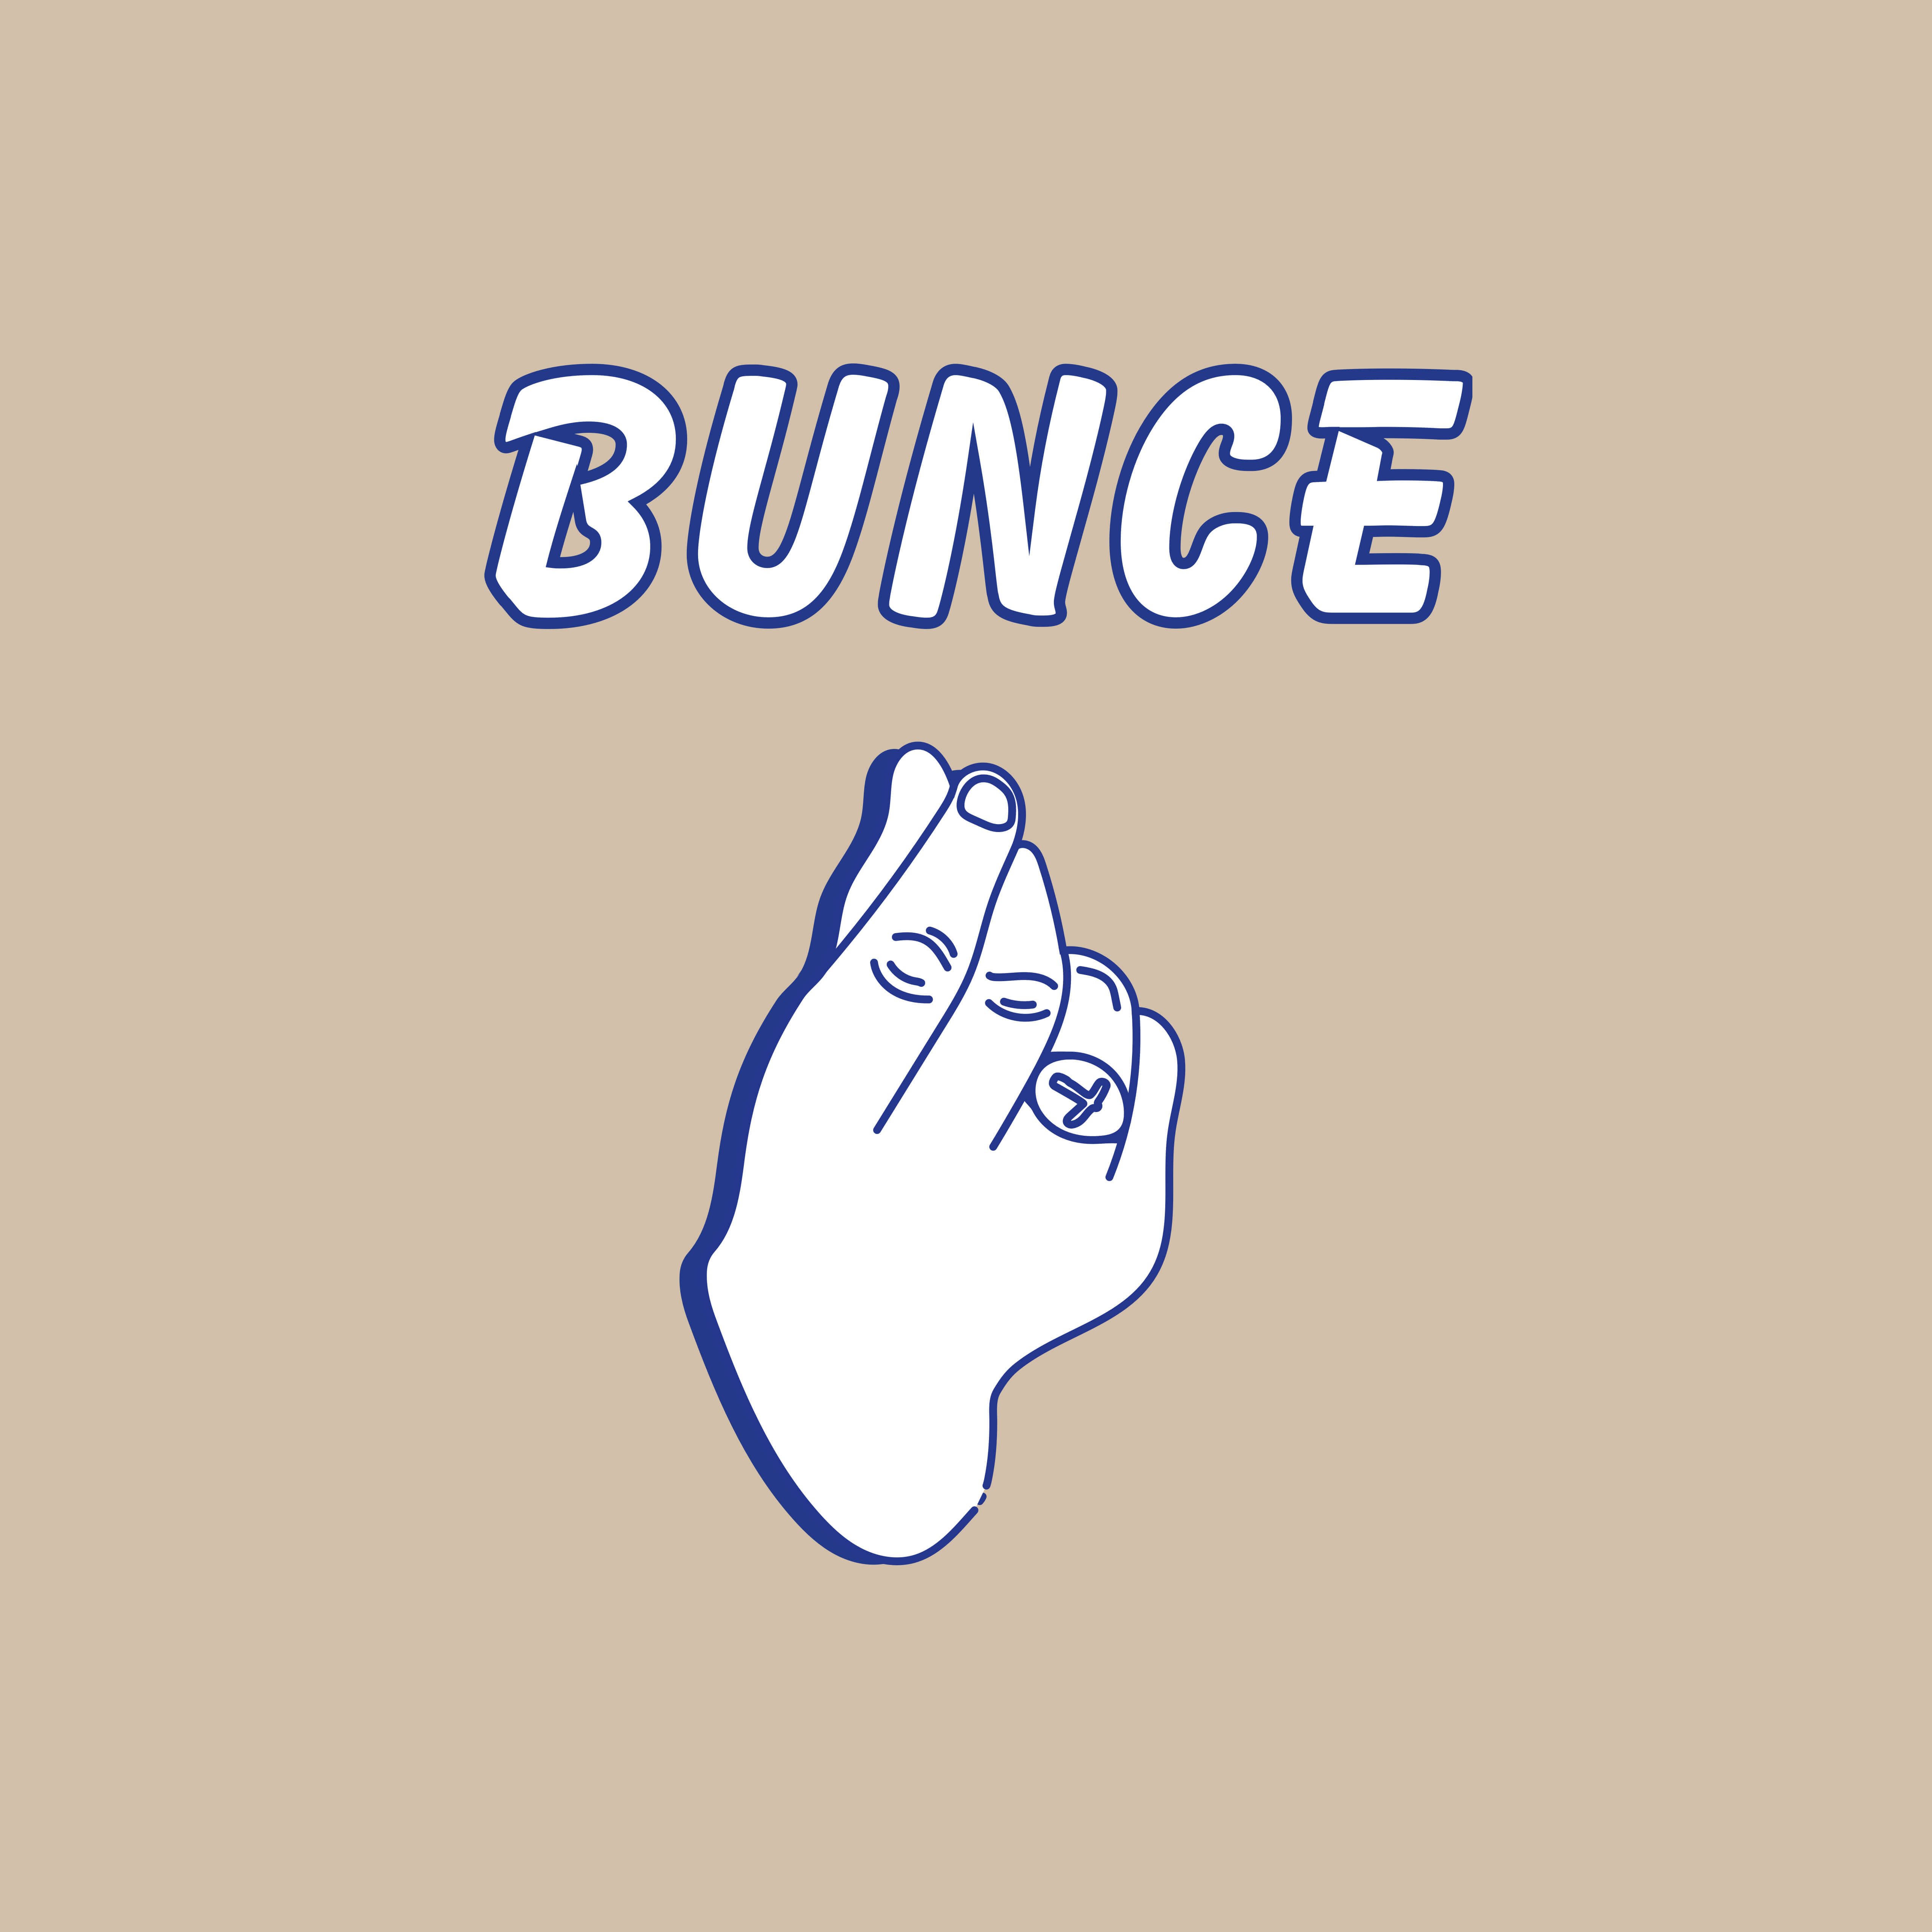 Bunce